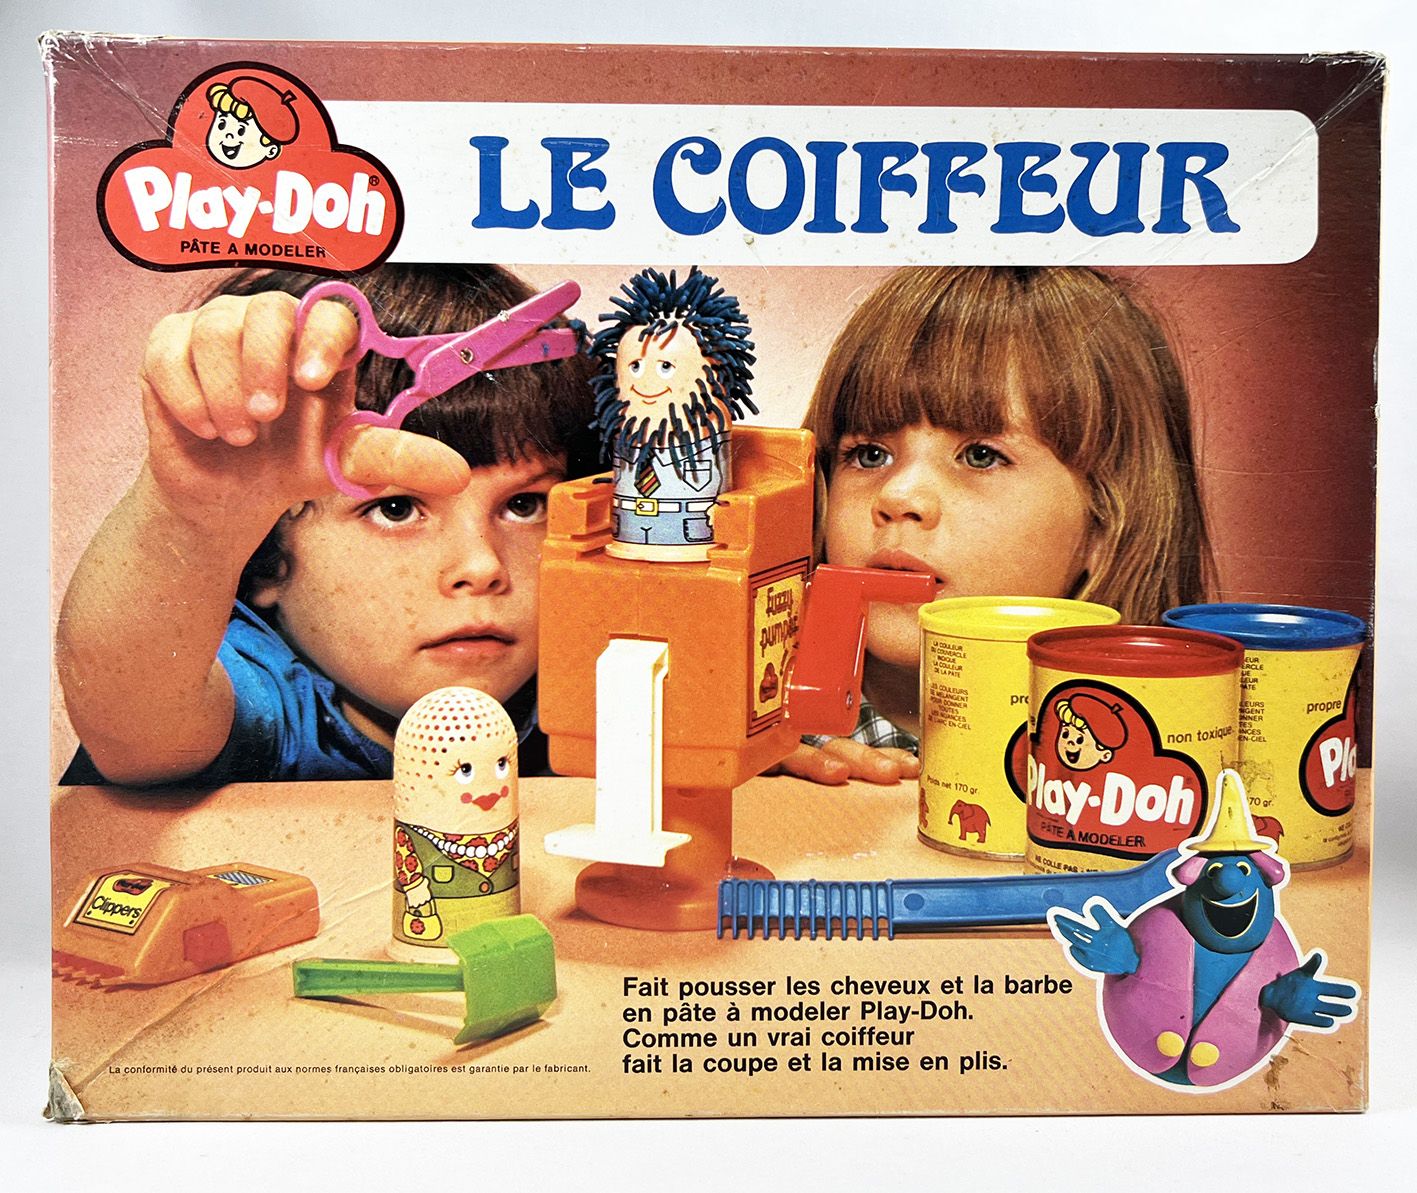 Le coiffeur play doh - Play-Doh